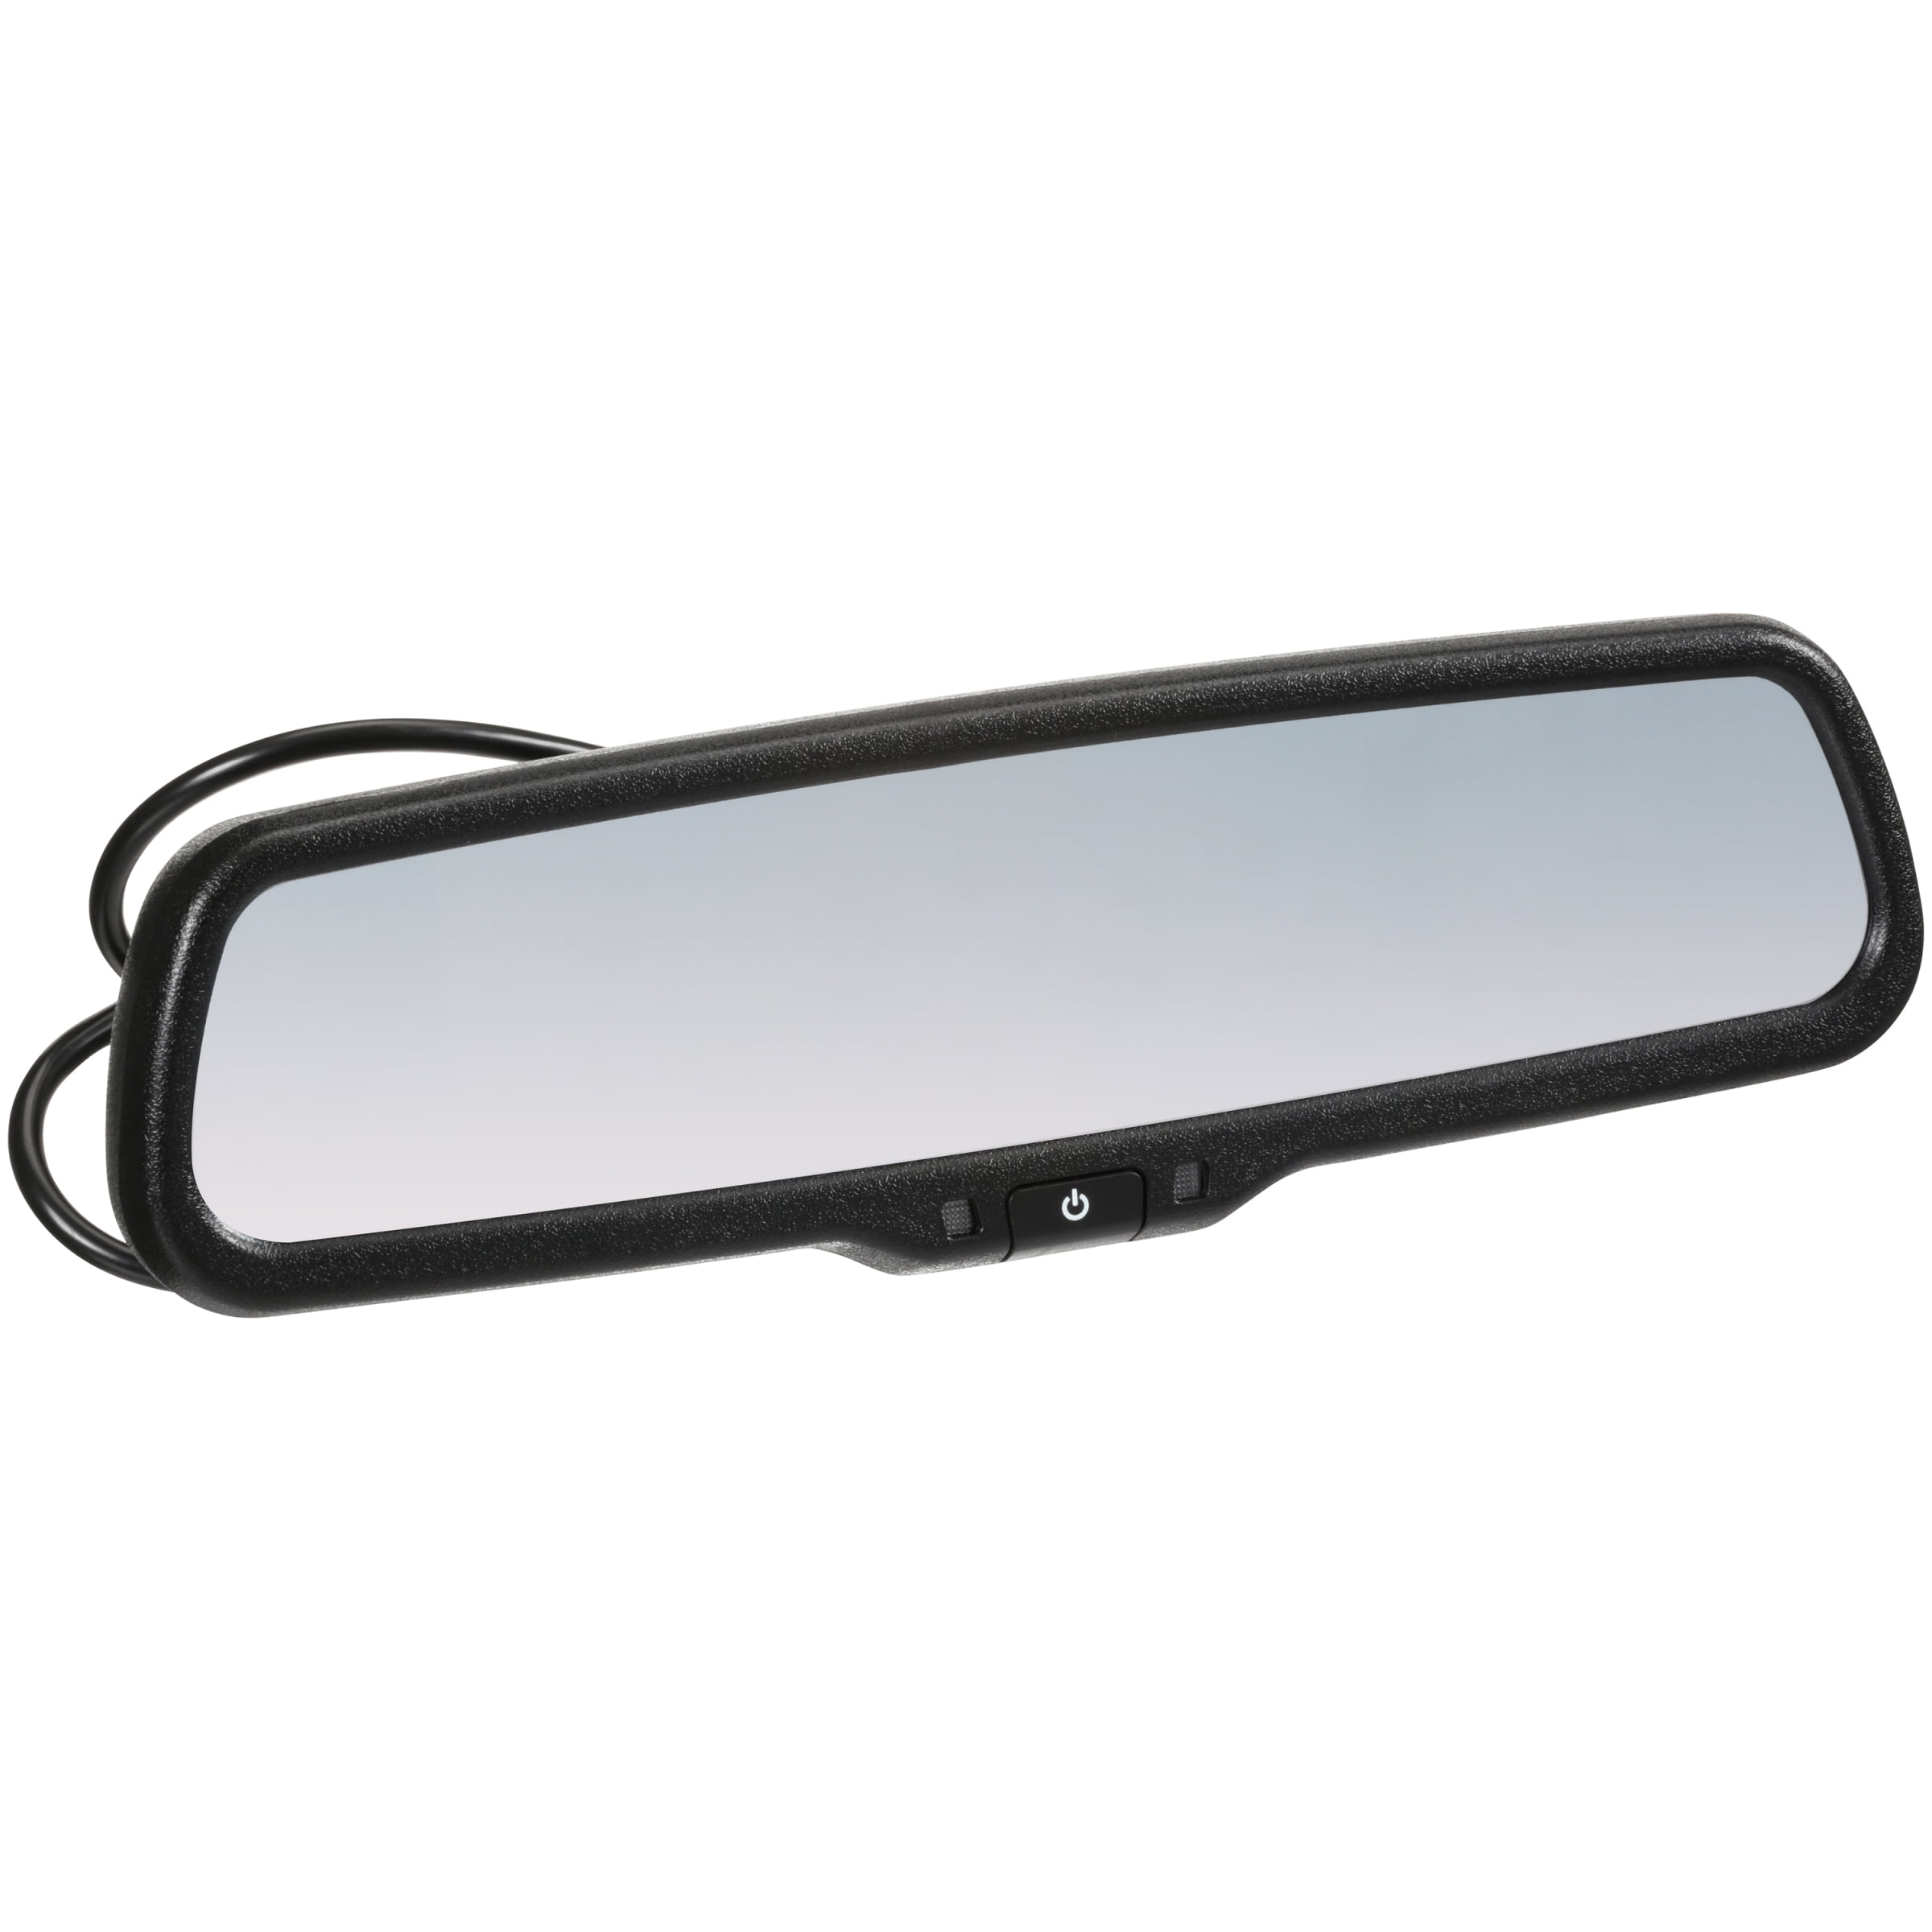 Exanko Popular Computer Rearview Convex Glasses Rear View Mirror Display Mirror 